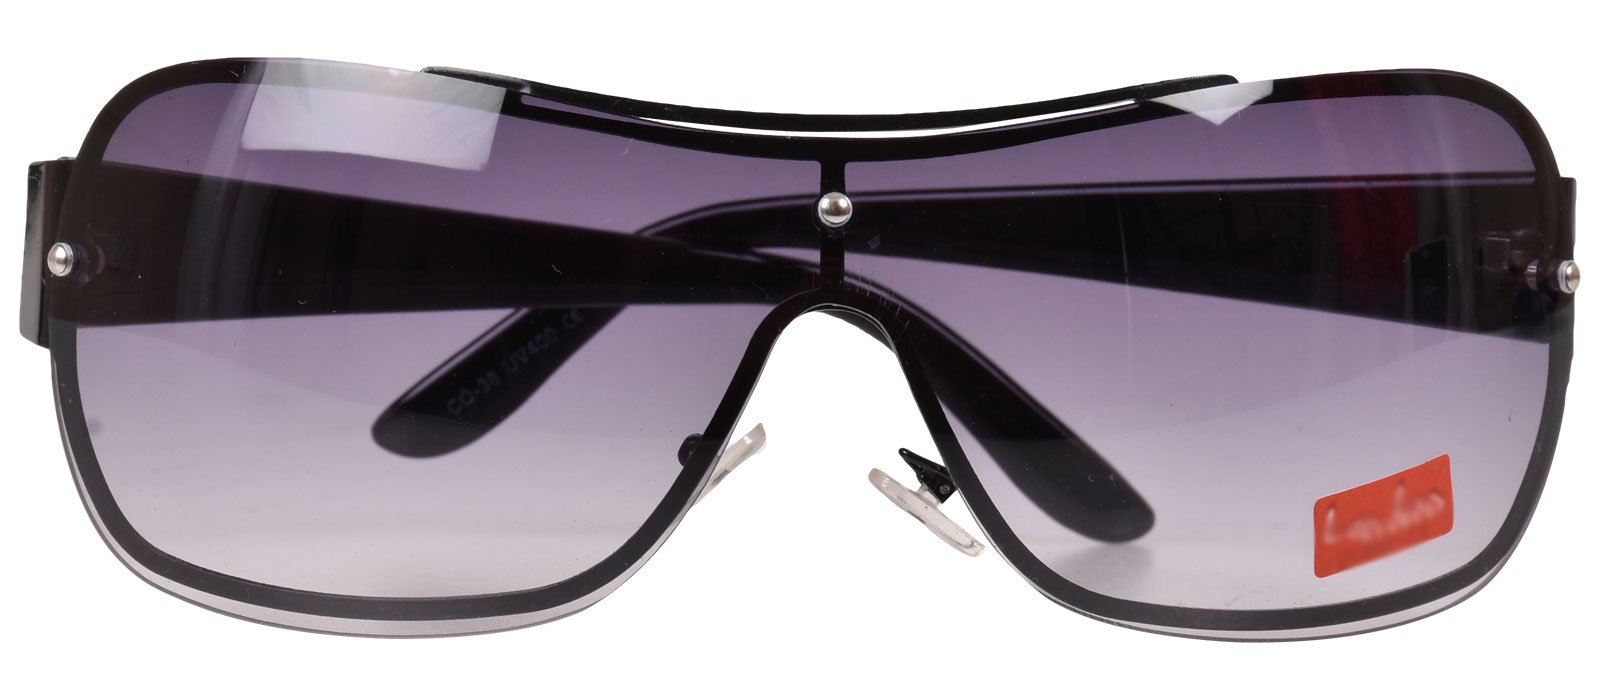 Sunglasses CQ38 Black